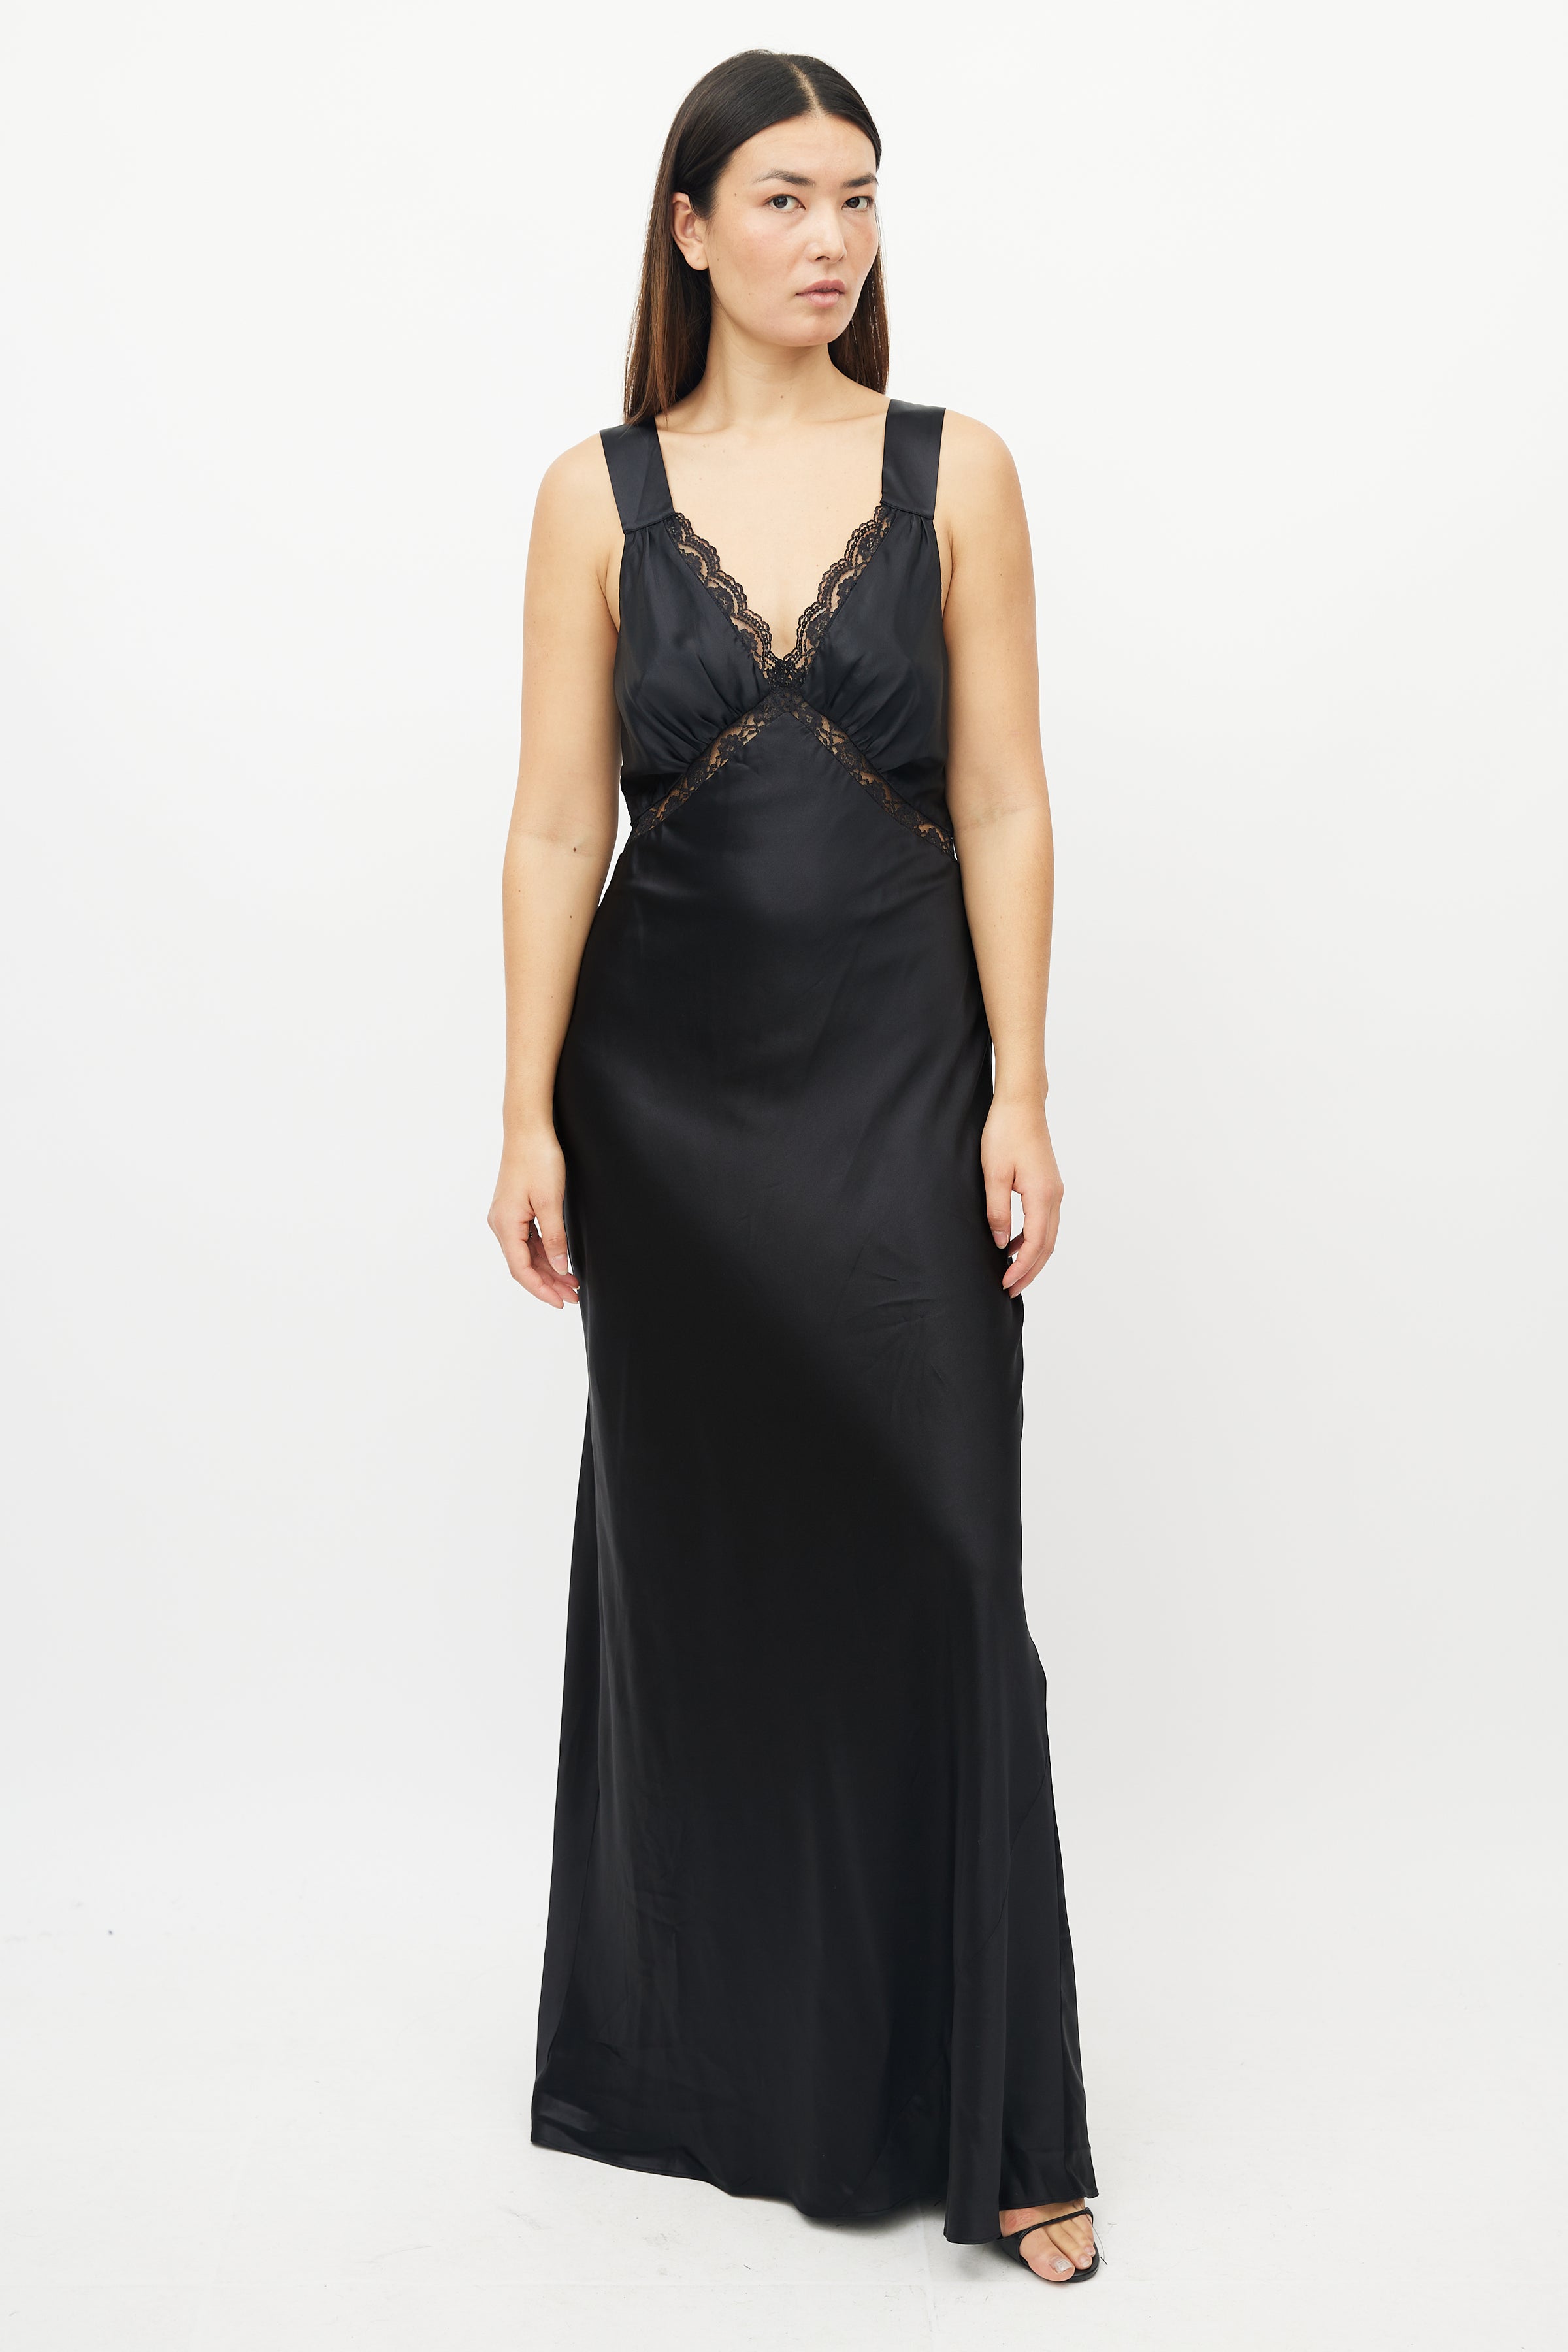 Buy Black Silk Dress With Slit Cowl Neck Spaghetti Strap Dress Elegant Long  Evening Dress Prom Dress Black Cocktail Dress Online in India - Etsy